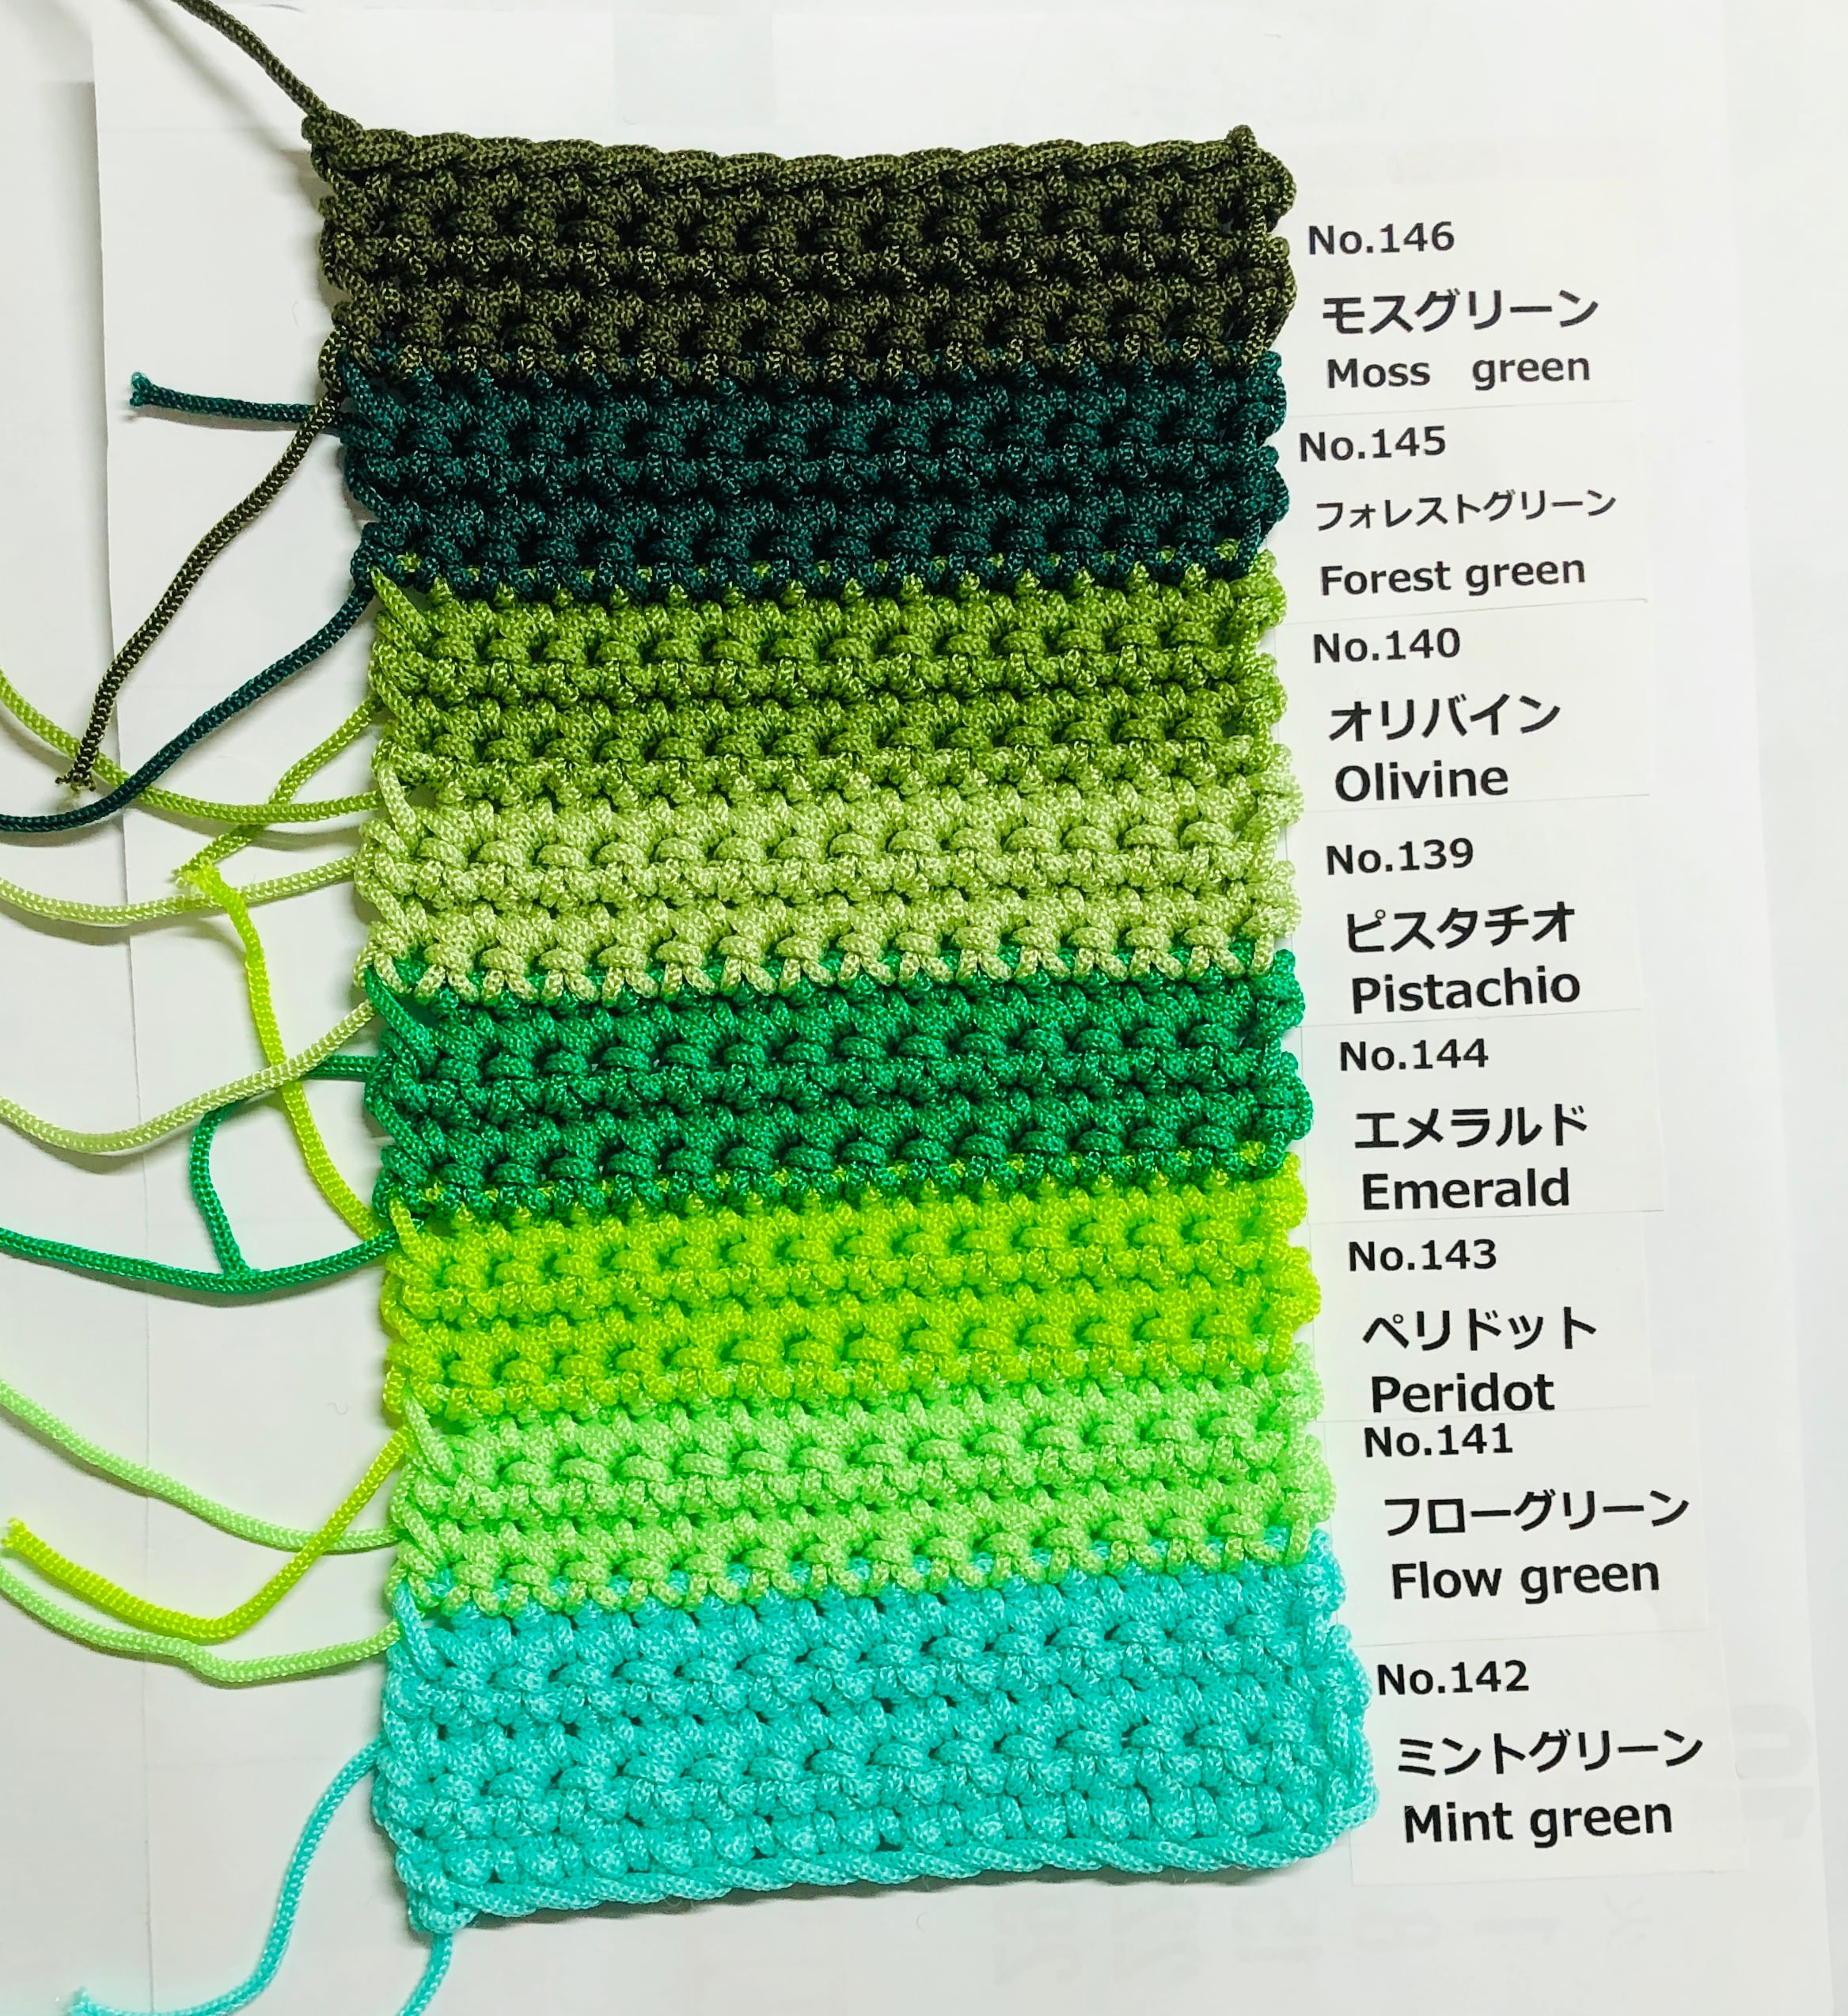 SWAN マクラメ糸 かぎ編み糸 25色セット販売 - 素材/材料